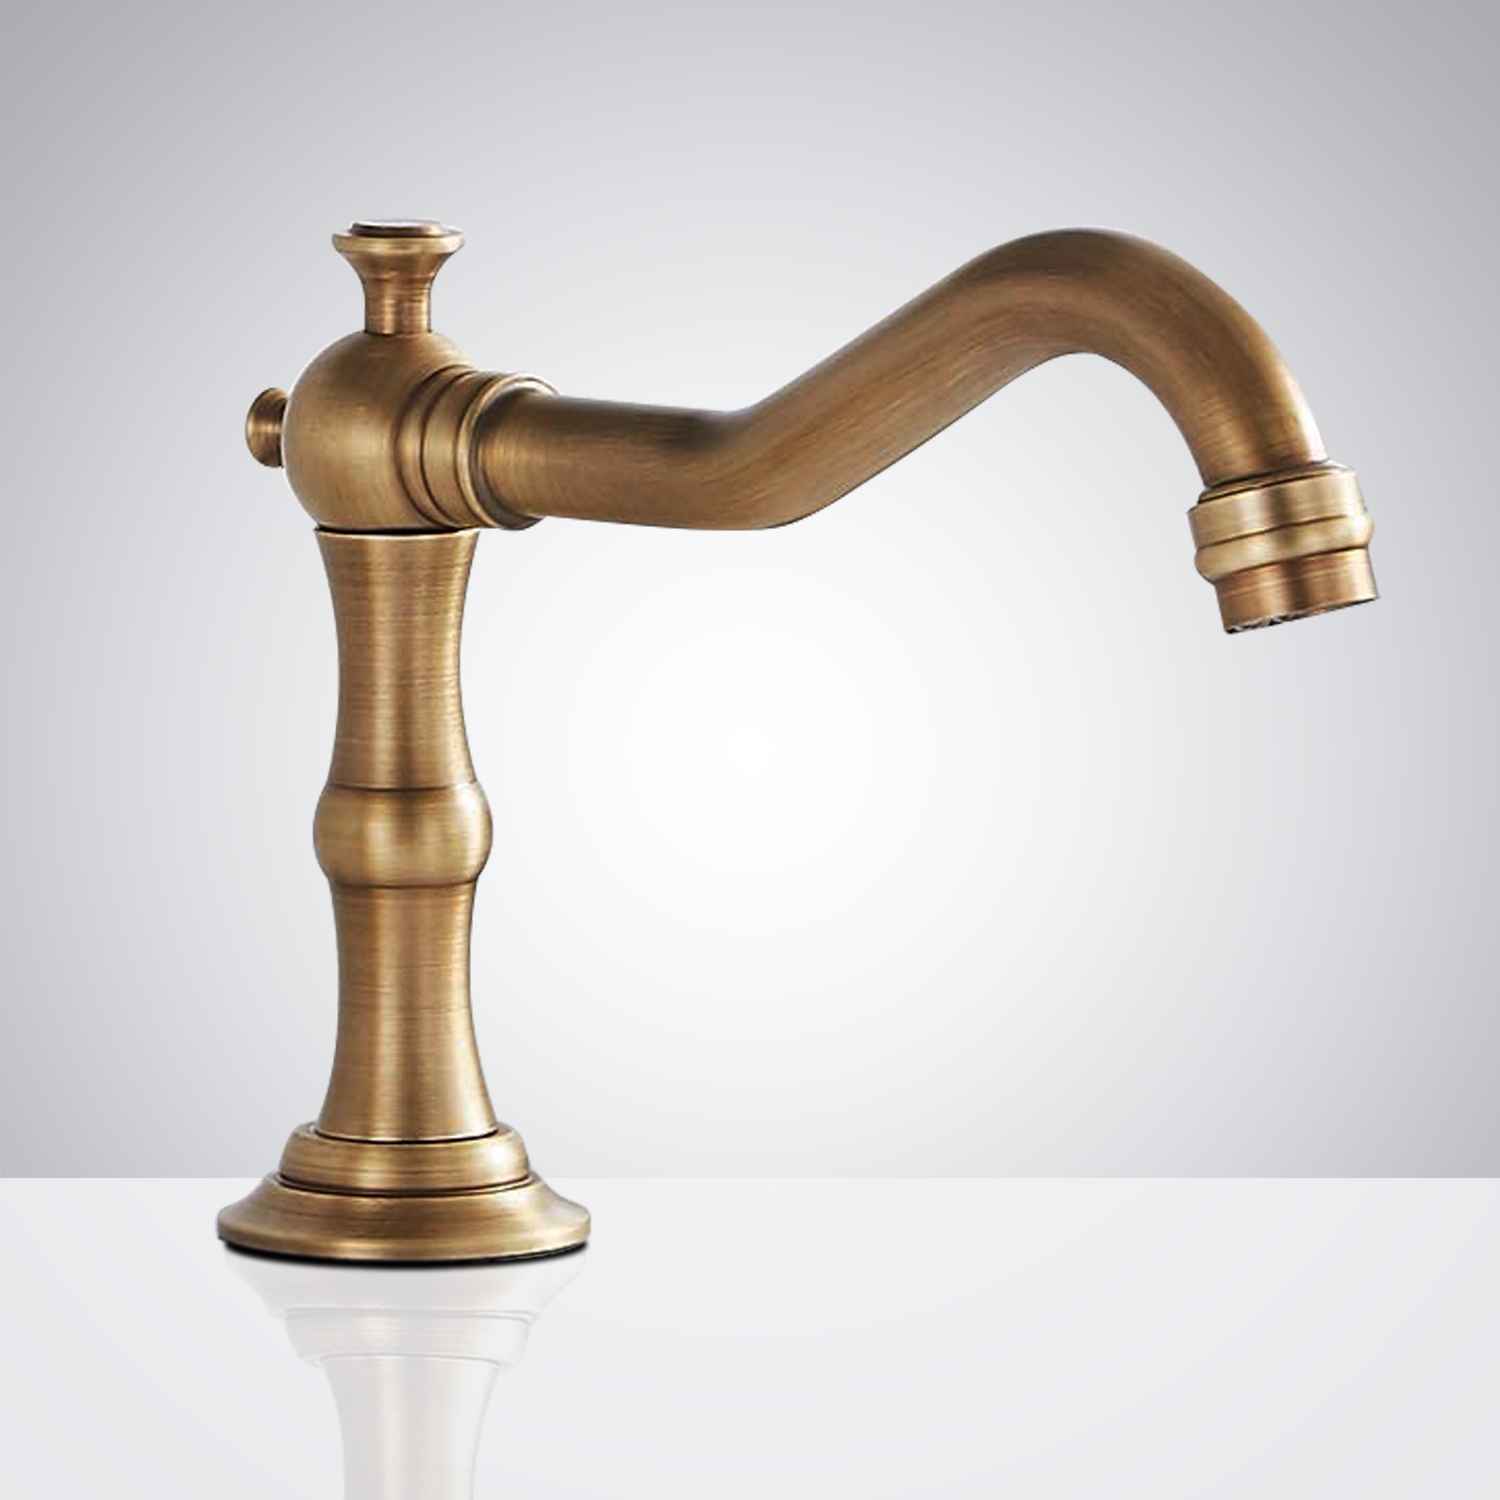 Fontana Commercial Antique Brass Automatic Sensor Faucet